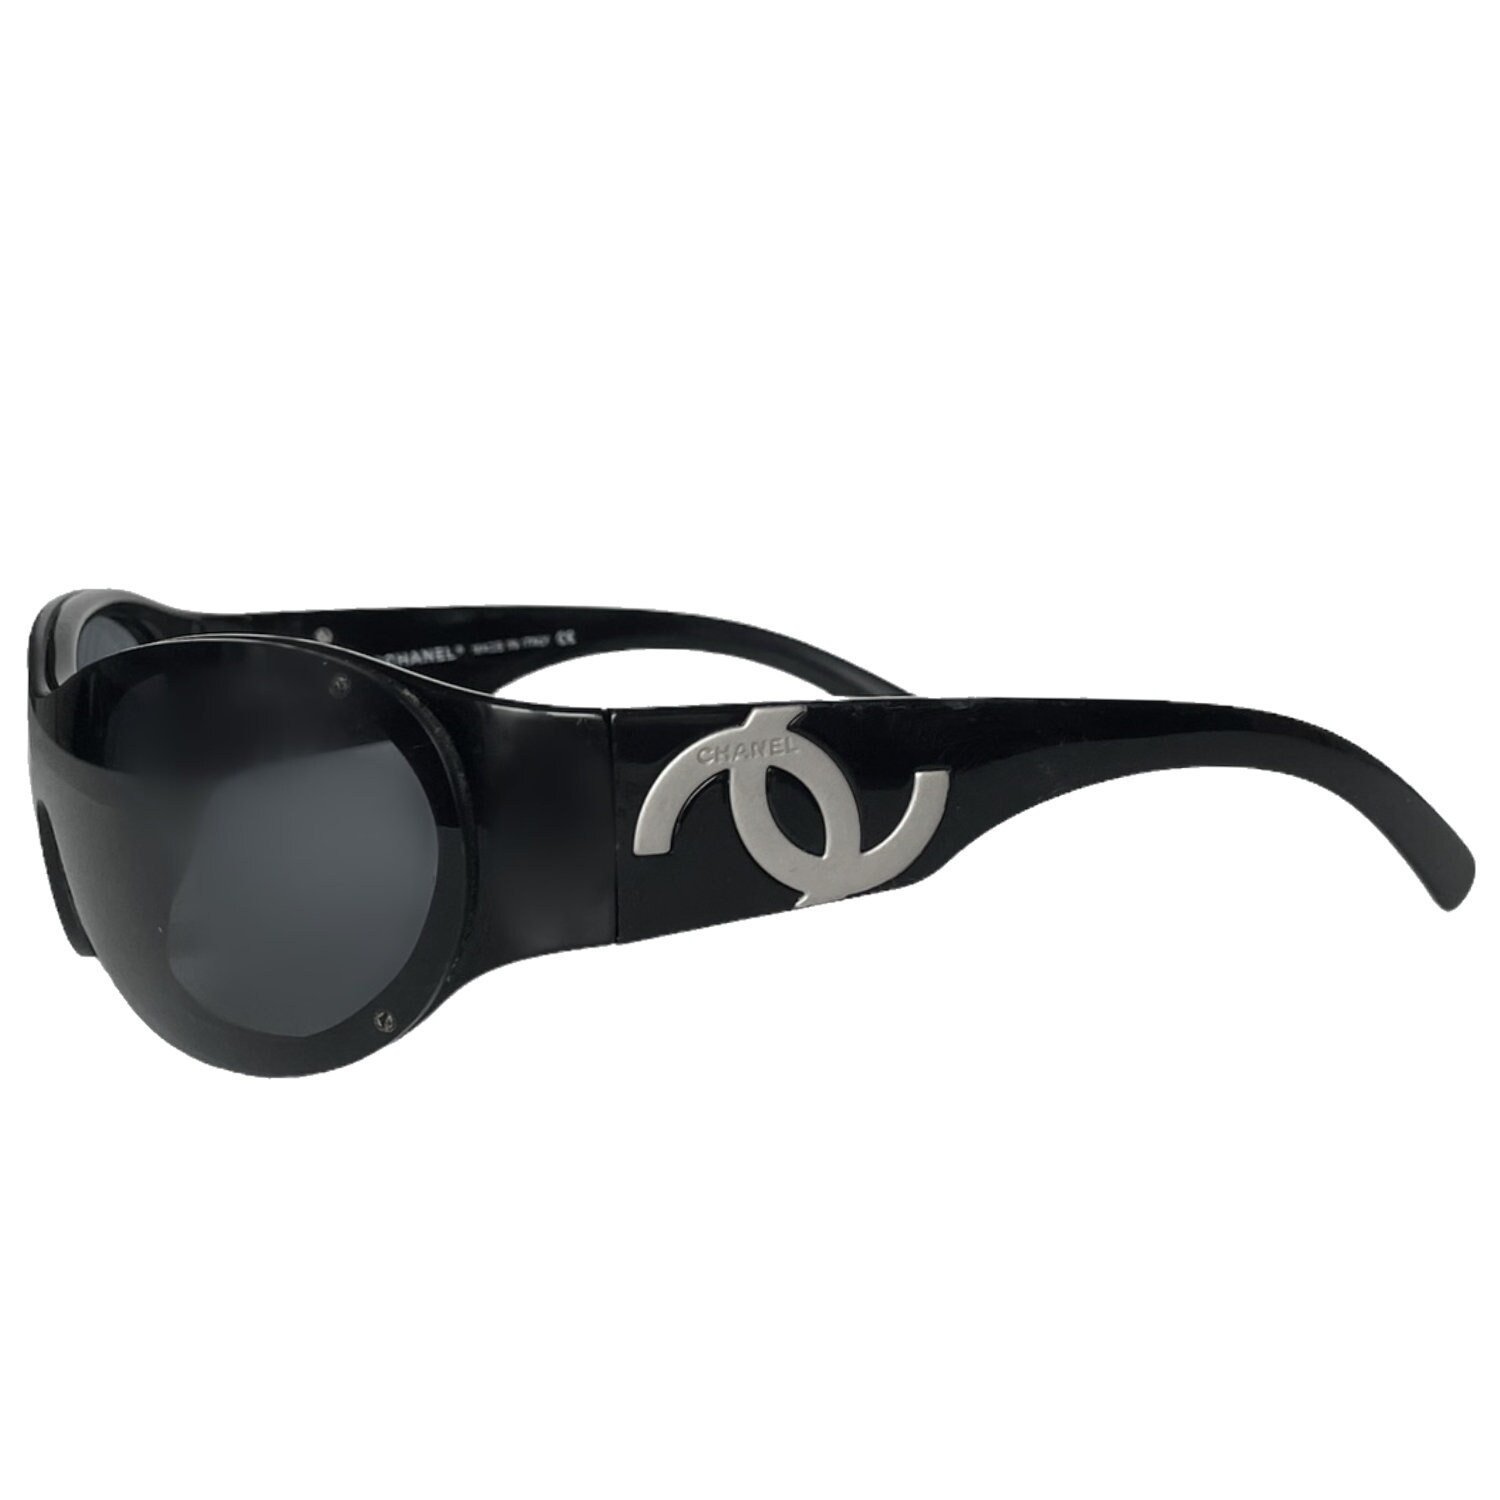 Chanel Sunglasses Authentic Chanel Logo Wraparound Ski 